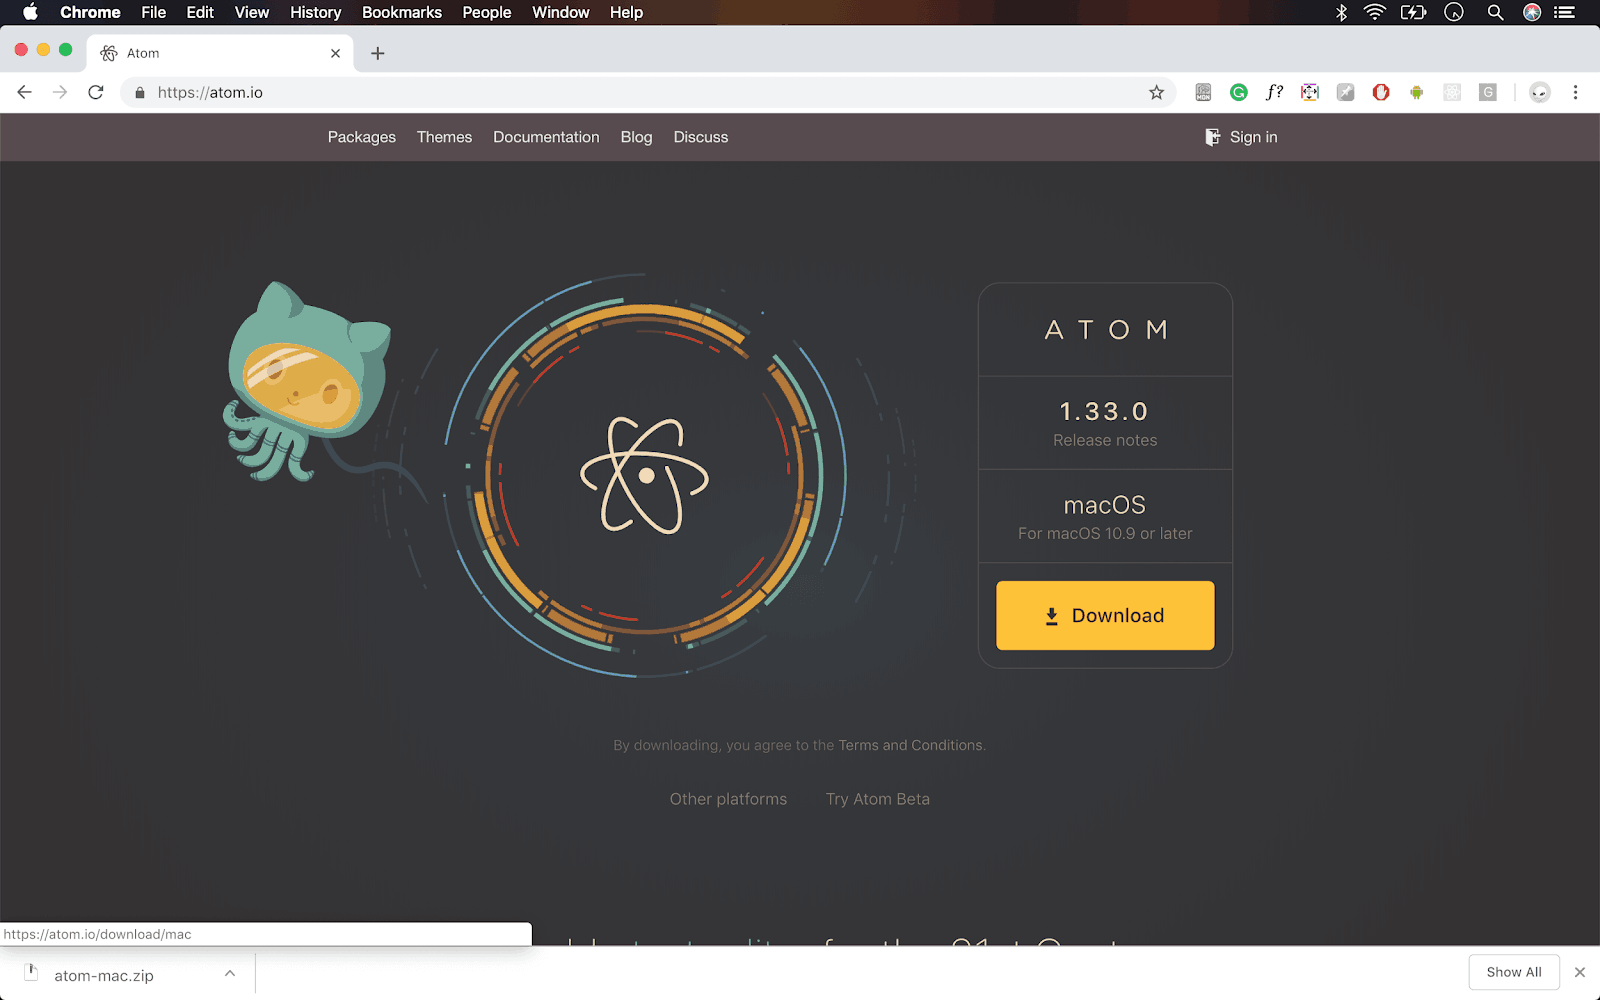 screenshot of atom.io homepage on Mac OS